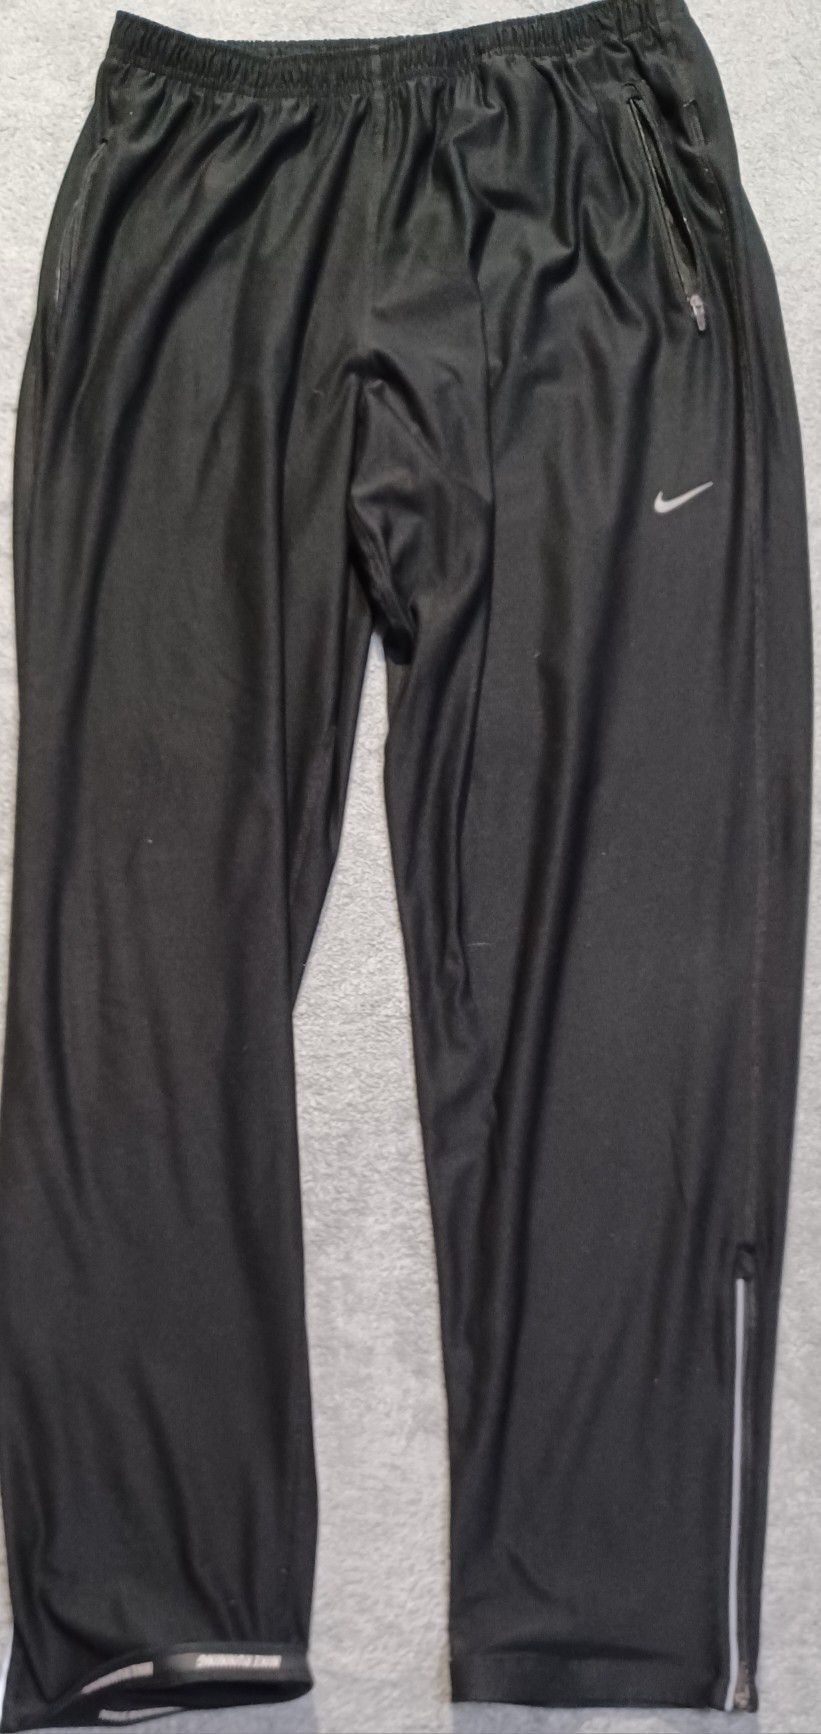 Men's Size Nike Pants Dri Fir Pockets Thin Running Workout Gym